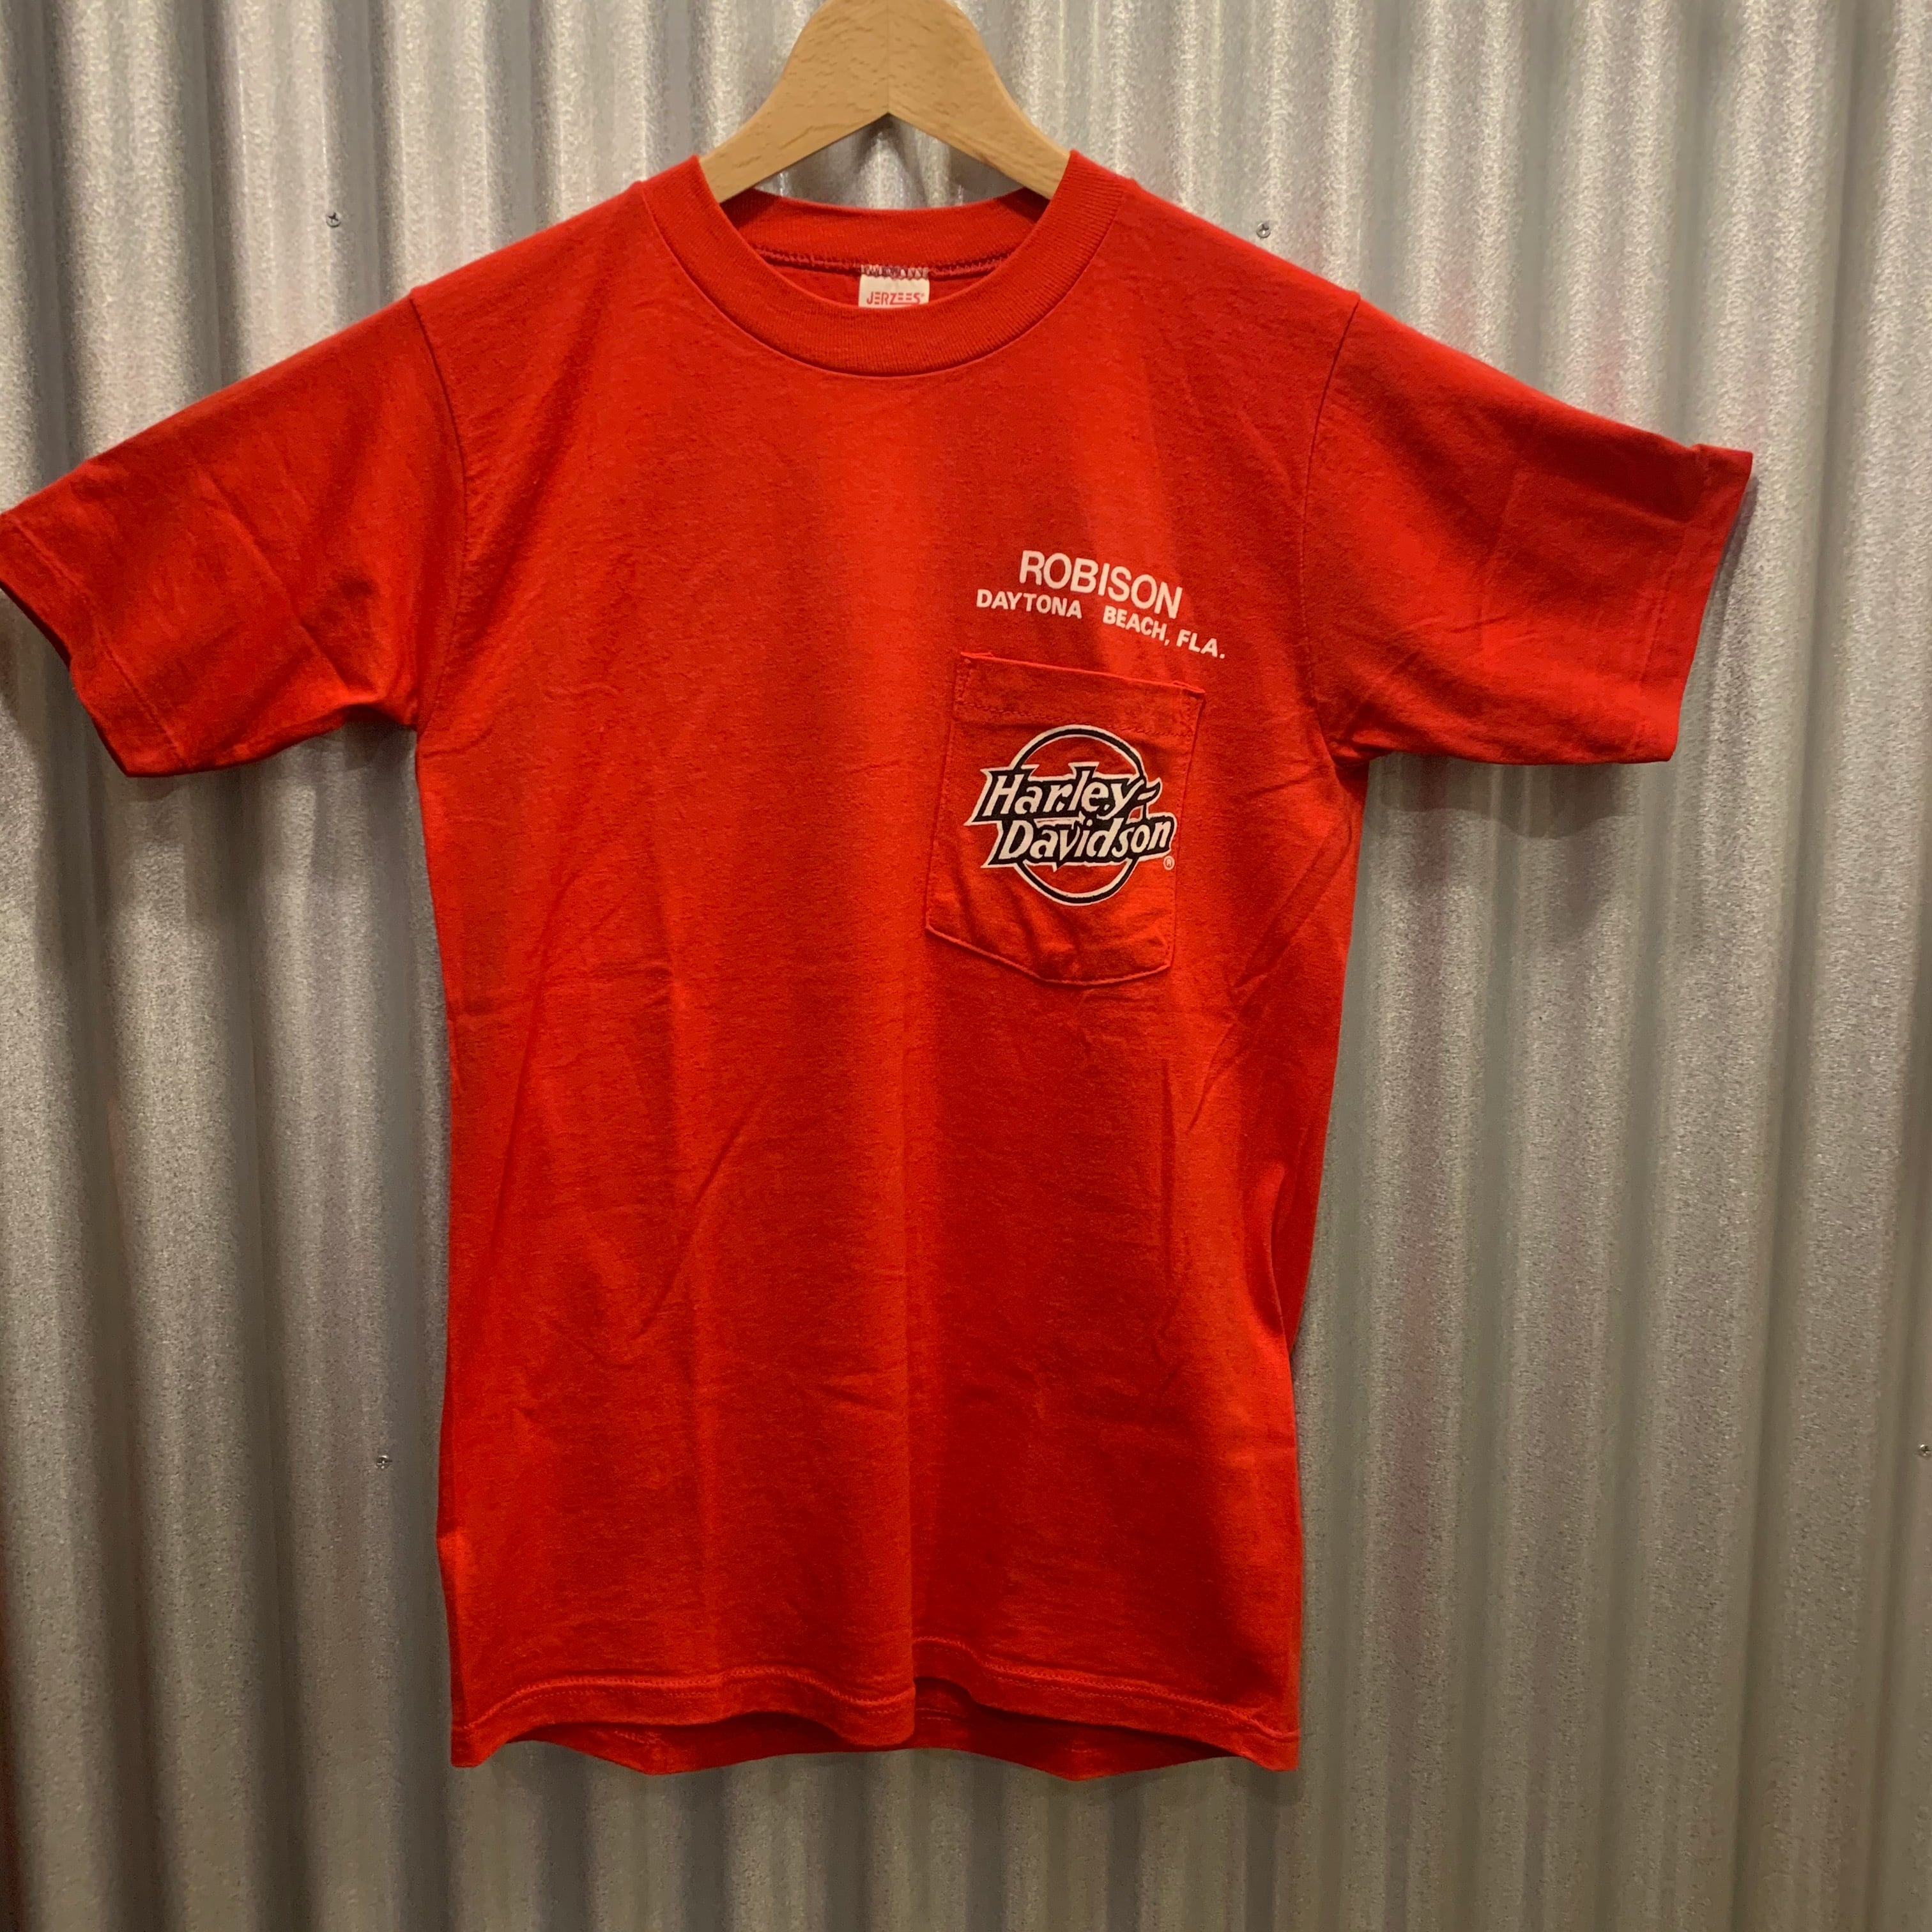 Harley Davidson red color t-shirts ハーレー・ダヴィッドソン デット